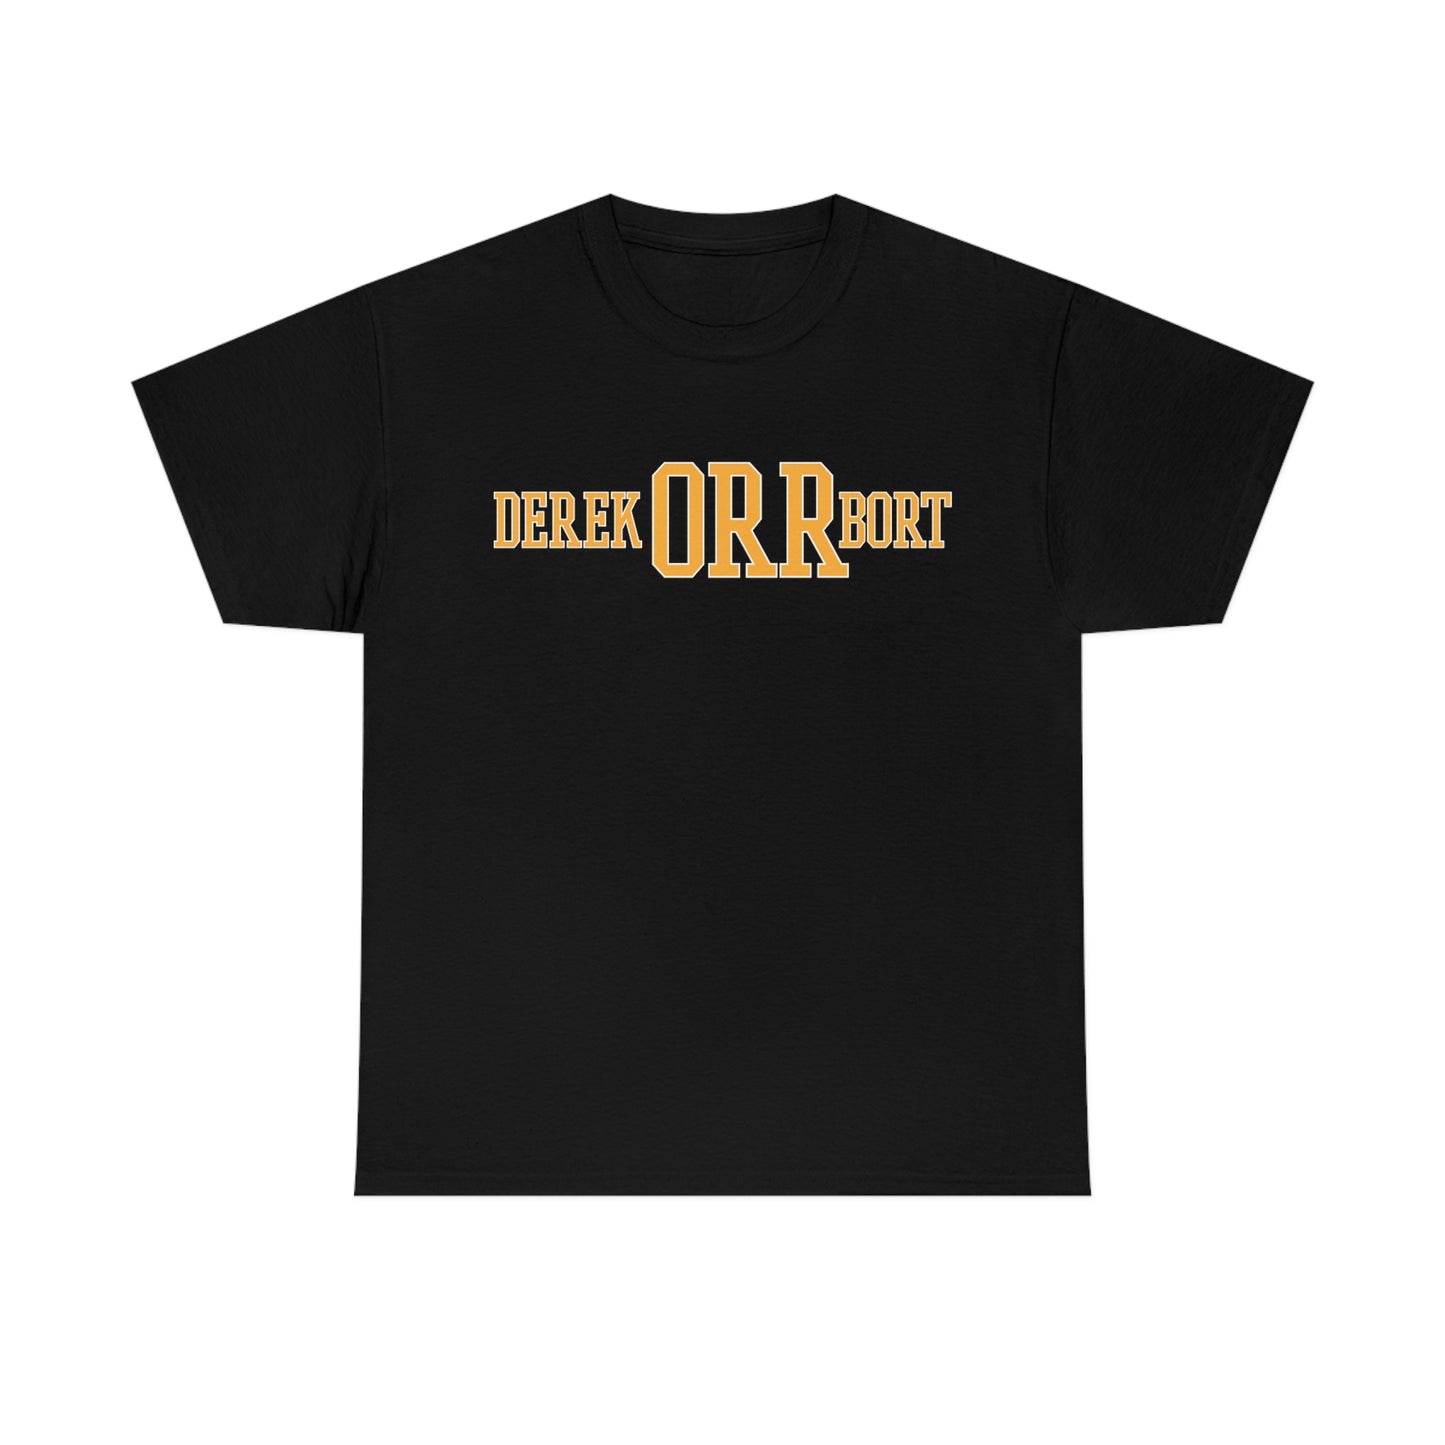 Derek Forbort Orrbort Darla T-Shirt Bruins Stanley Cup